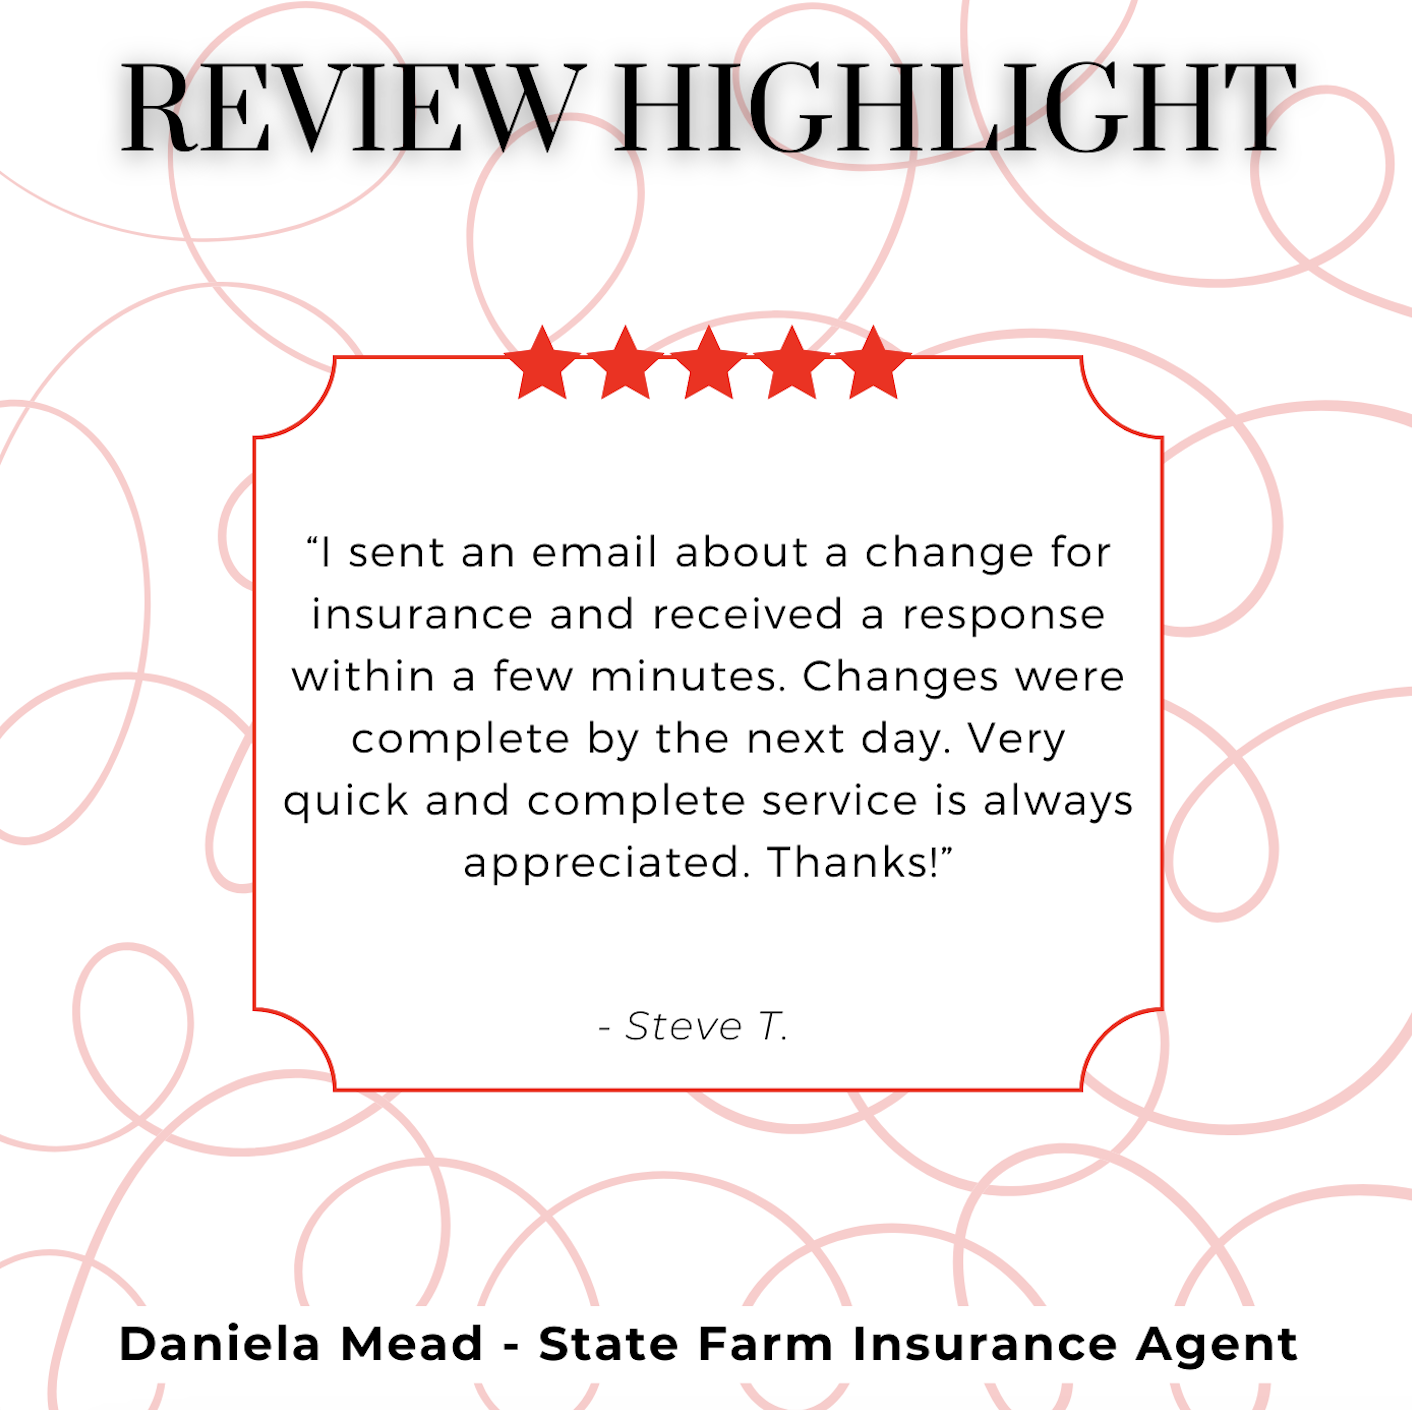 Daniela Mead - State Farm Insurance Agent